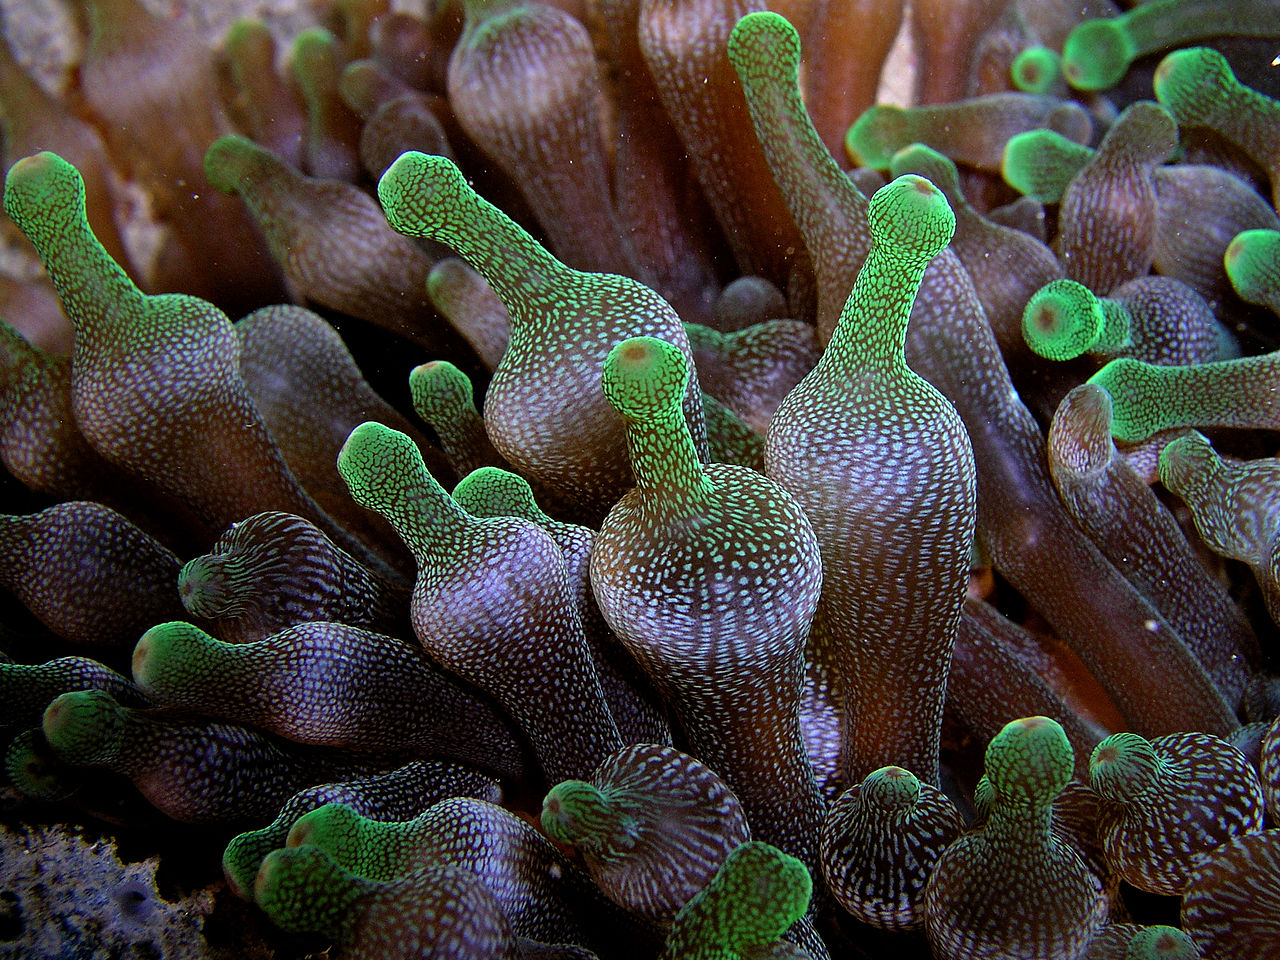 Entacmaea quadricolor (Bulb Tentacle Sea Anemone)